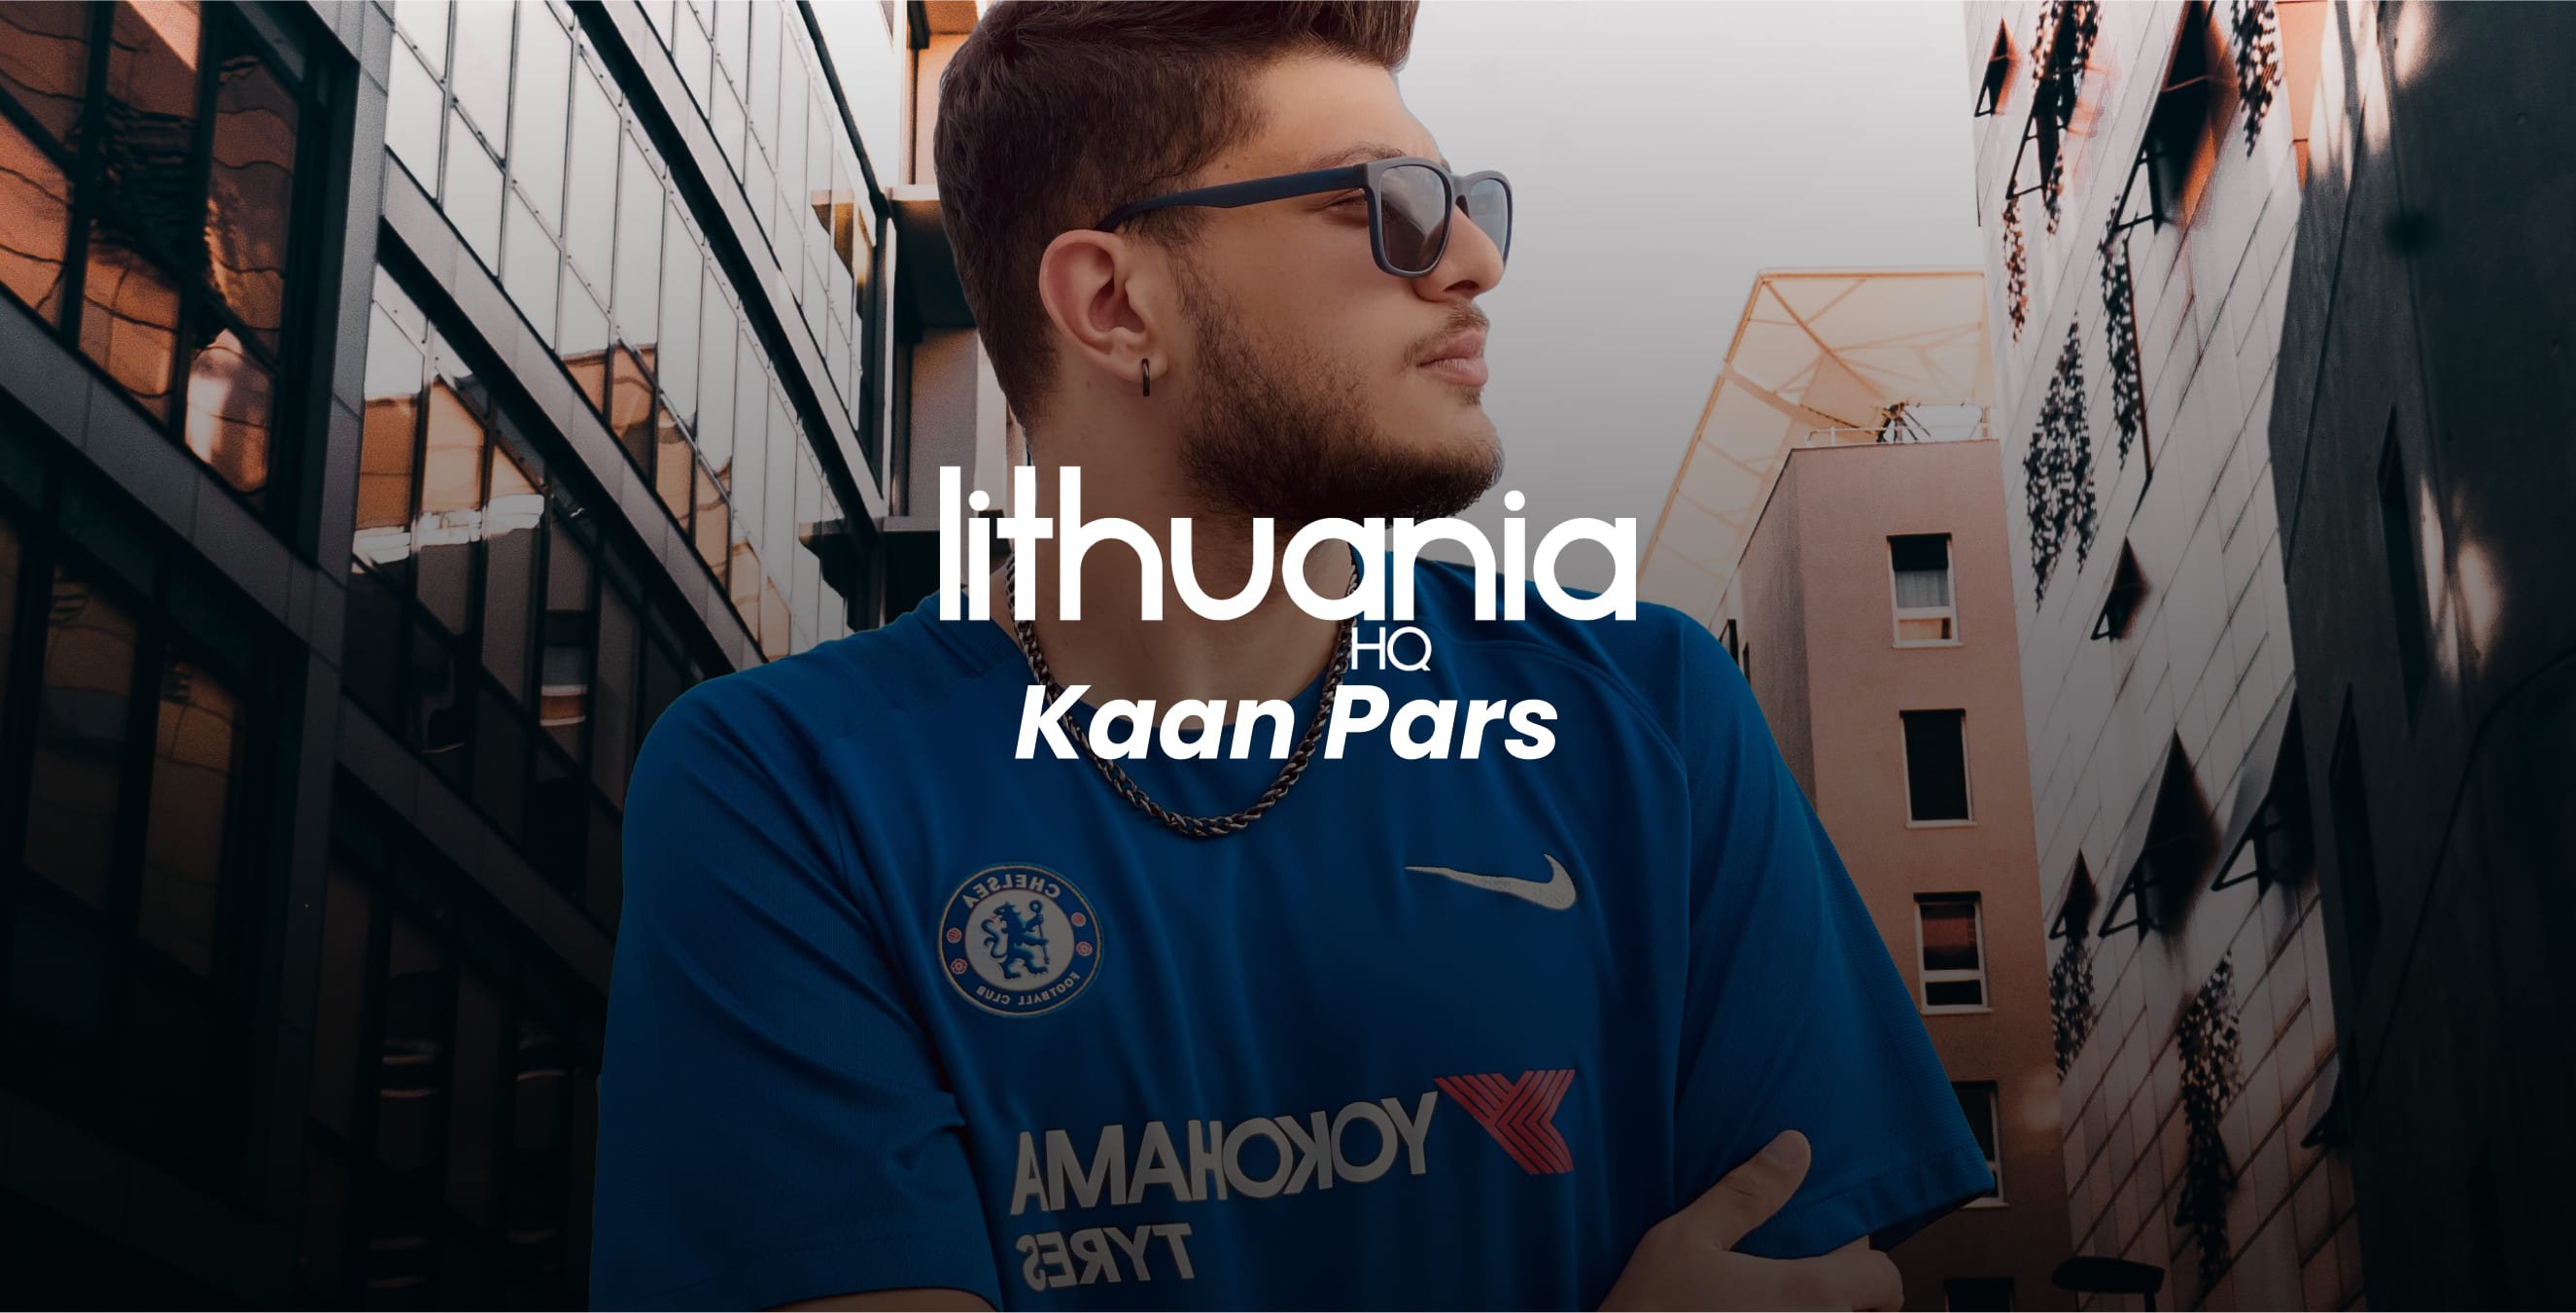 Kaan Pars - Lithuania HQ Catalogue (1)